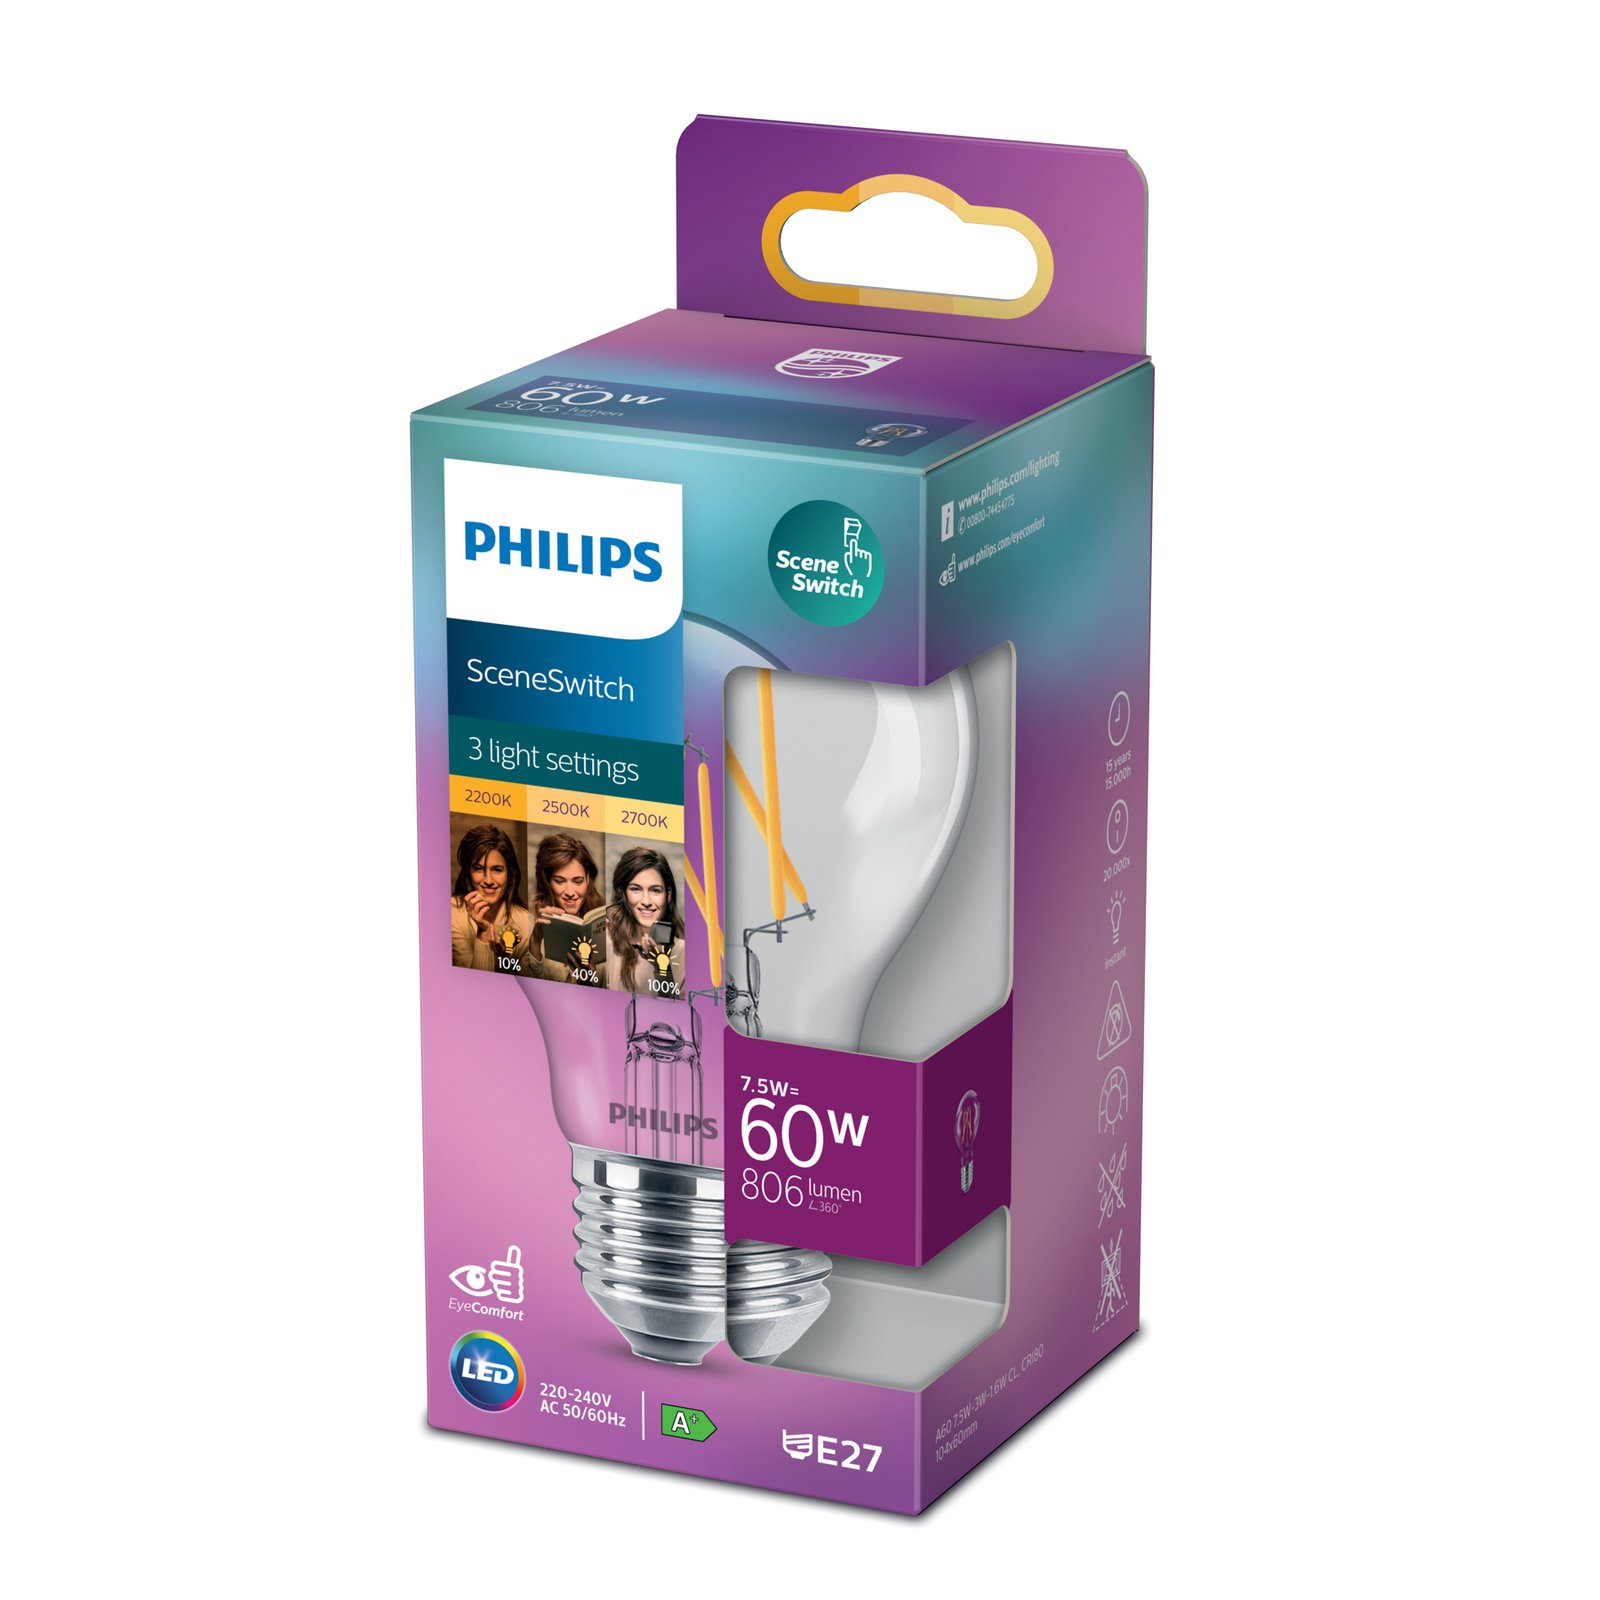 Philips SceneSwitch E27 LED lamp 7.5W Filament